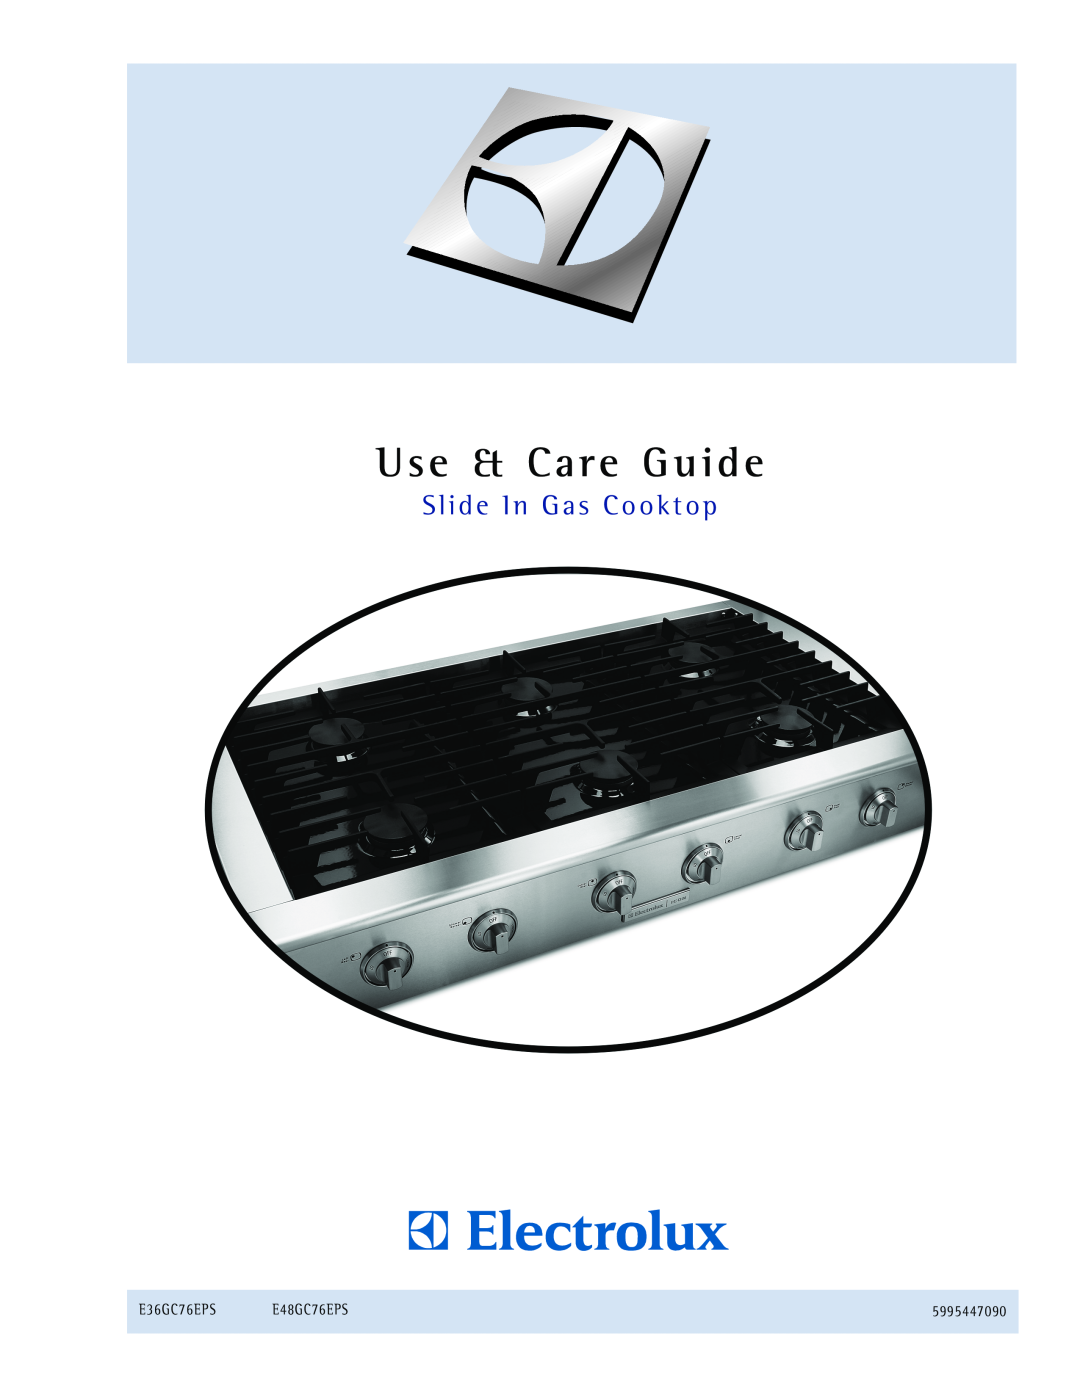 Electrolux E48GC76EPS manual Use & Care Guide, Slide In Gas Cooktop, E36GC76EPS, 5995447090 